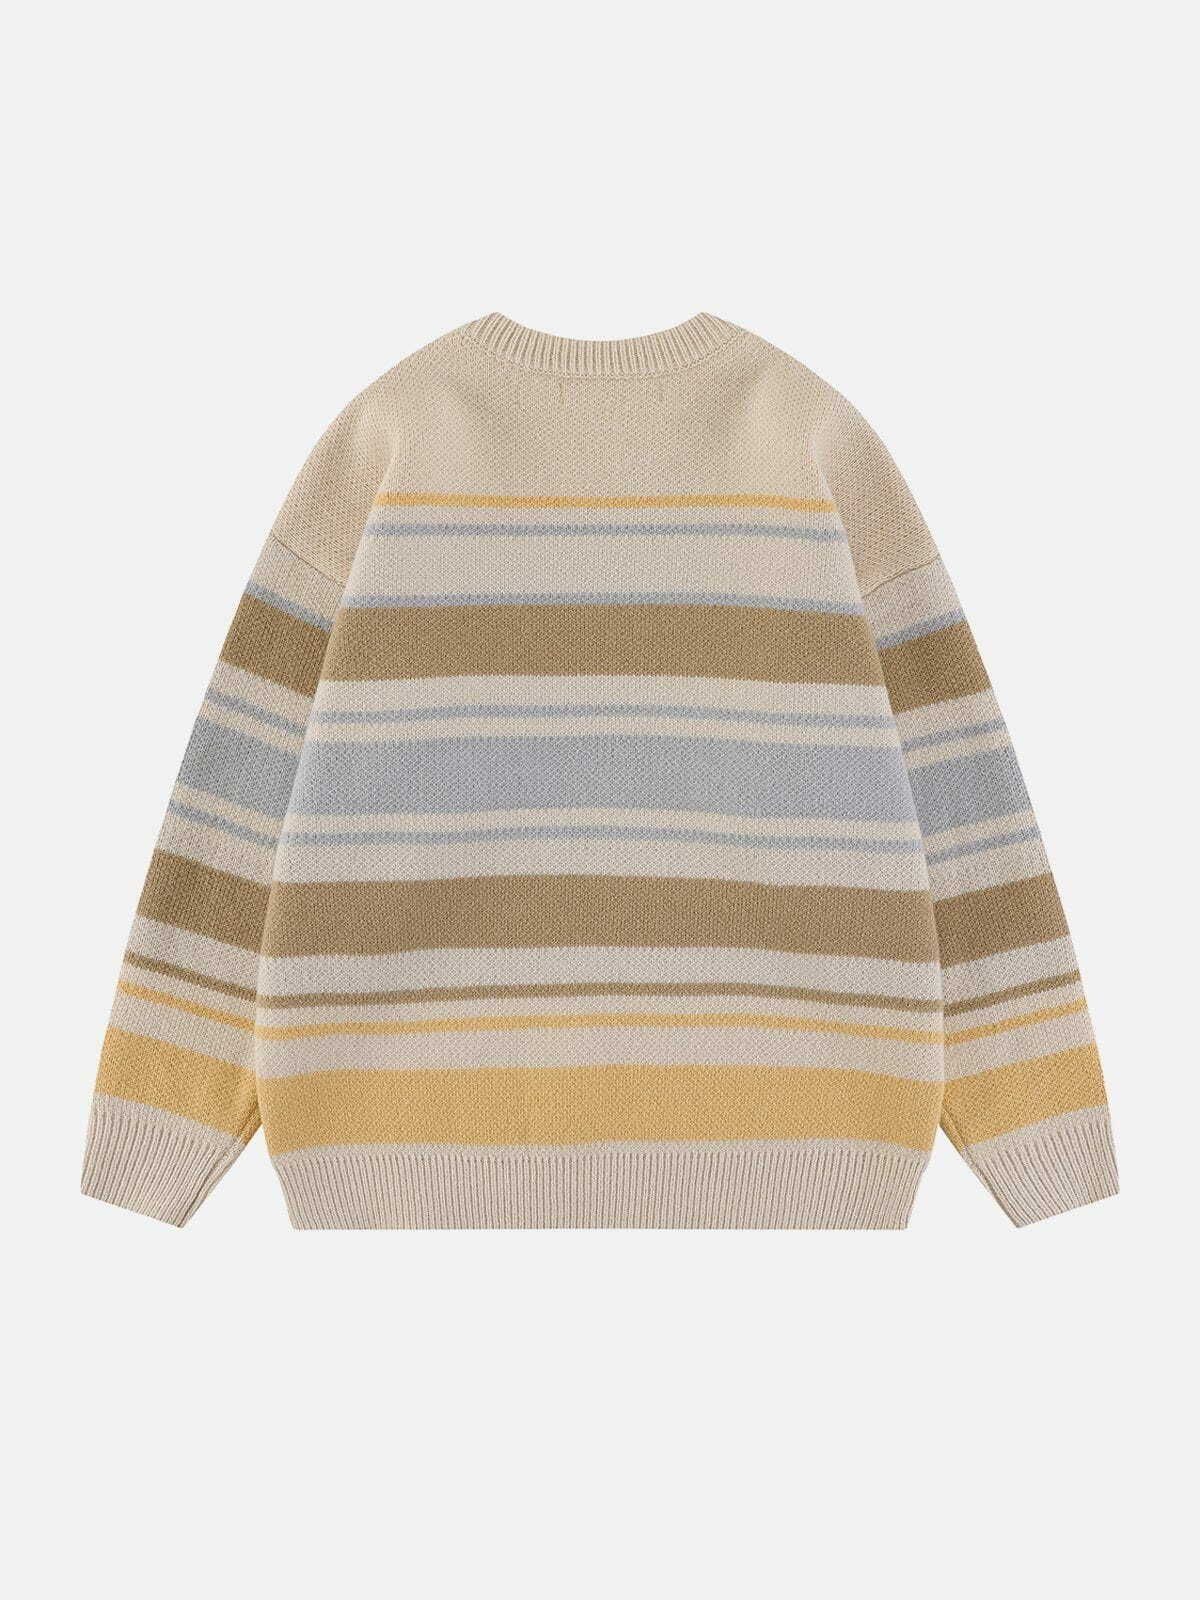 retro striped sweater vibrant & timeless fashion 5705